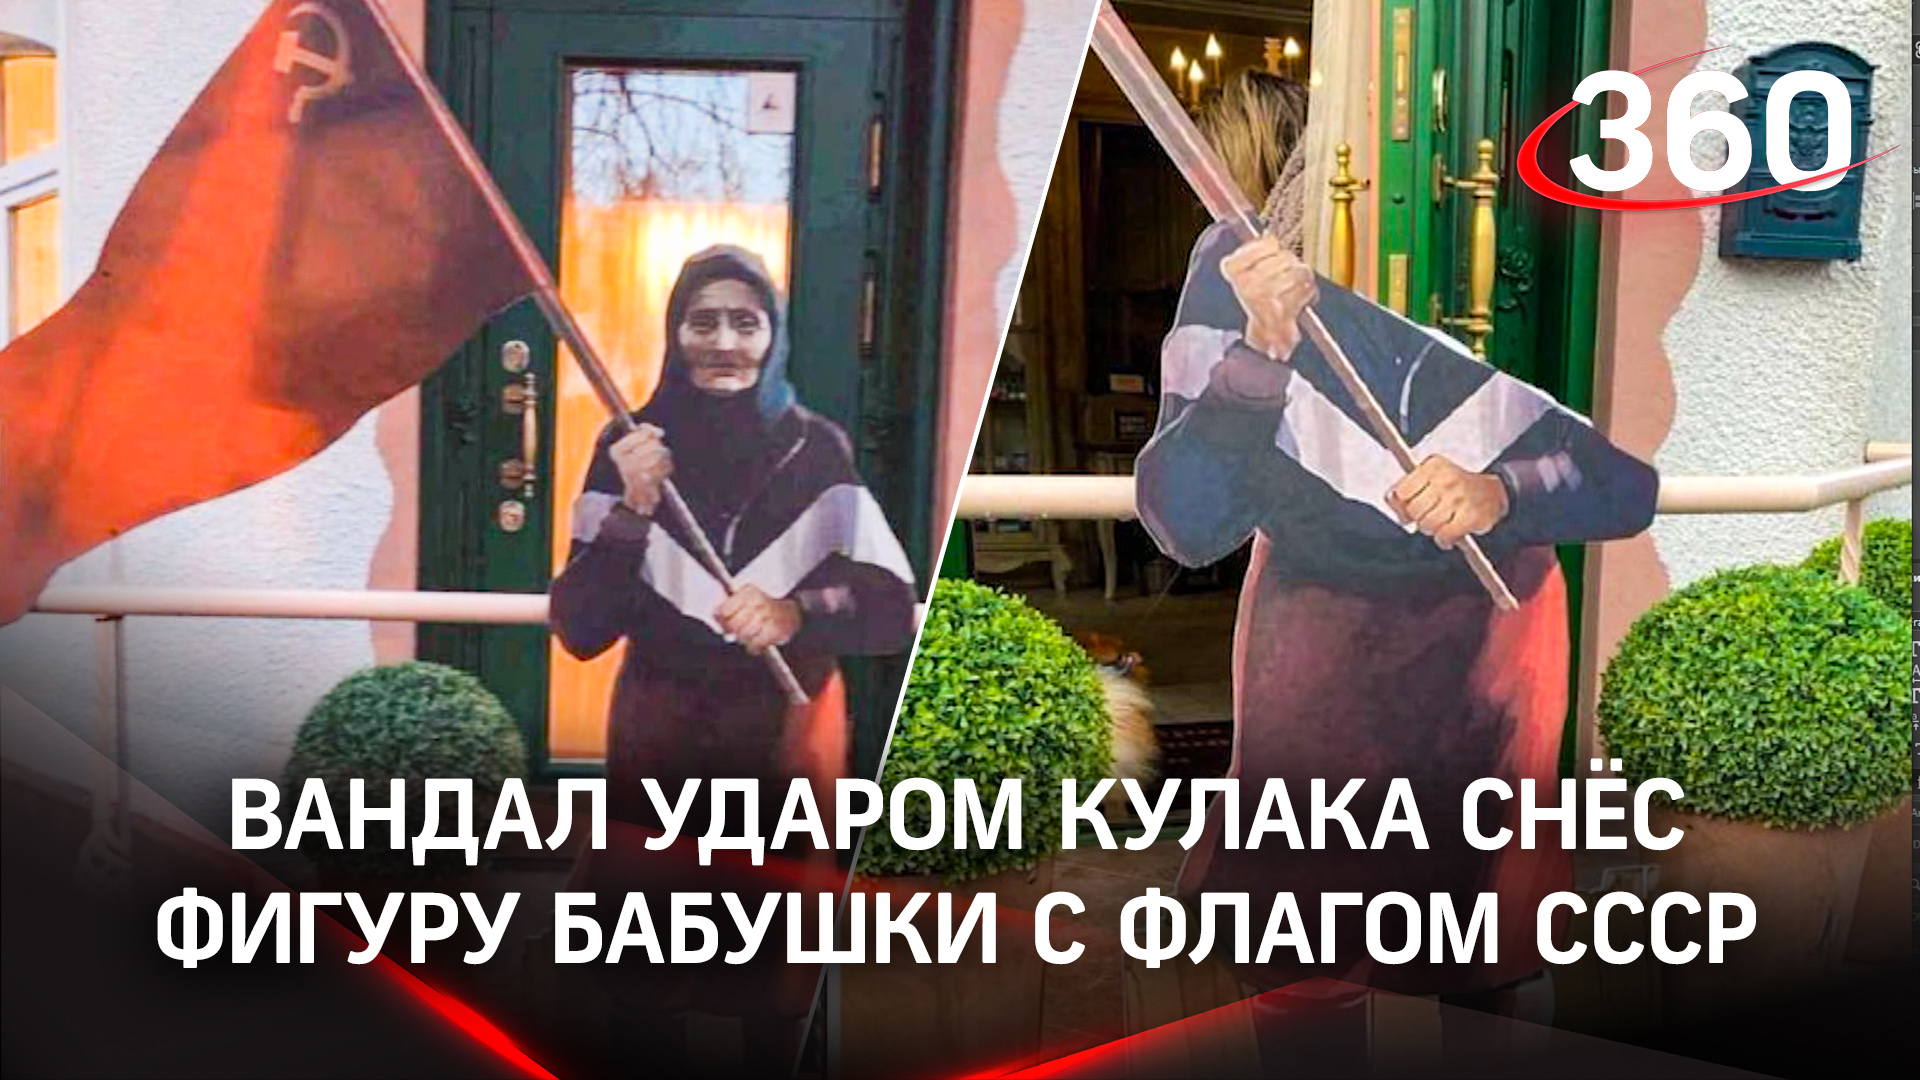 Картонный воин: пьяный вандал ударом кулака снёс фигуру бабушки с флагом СССР